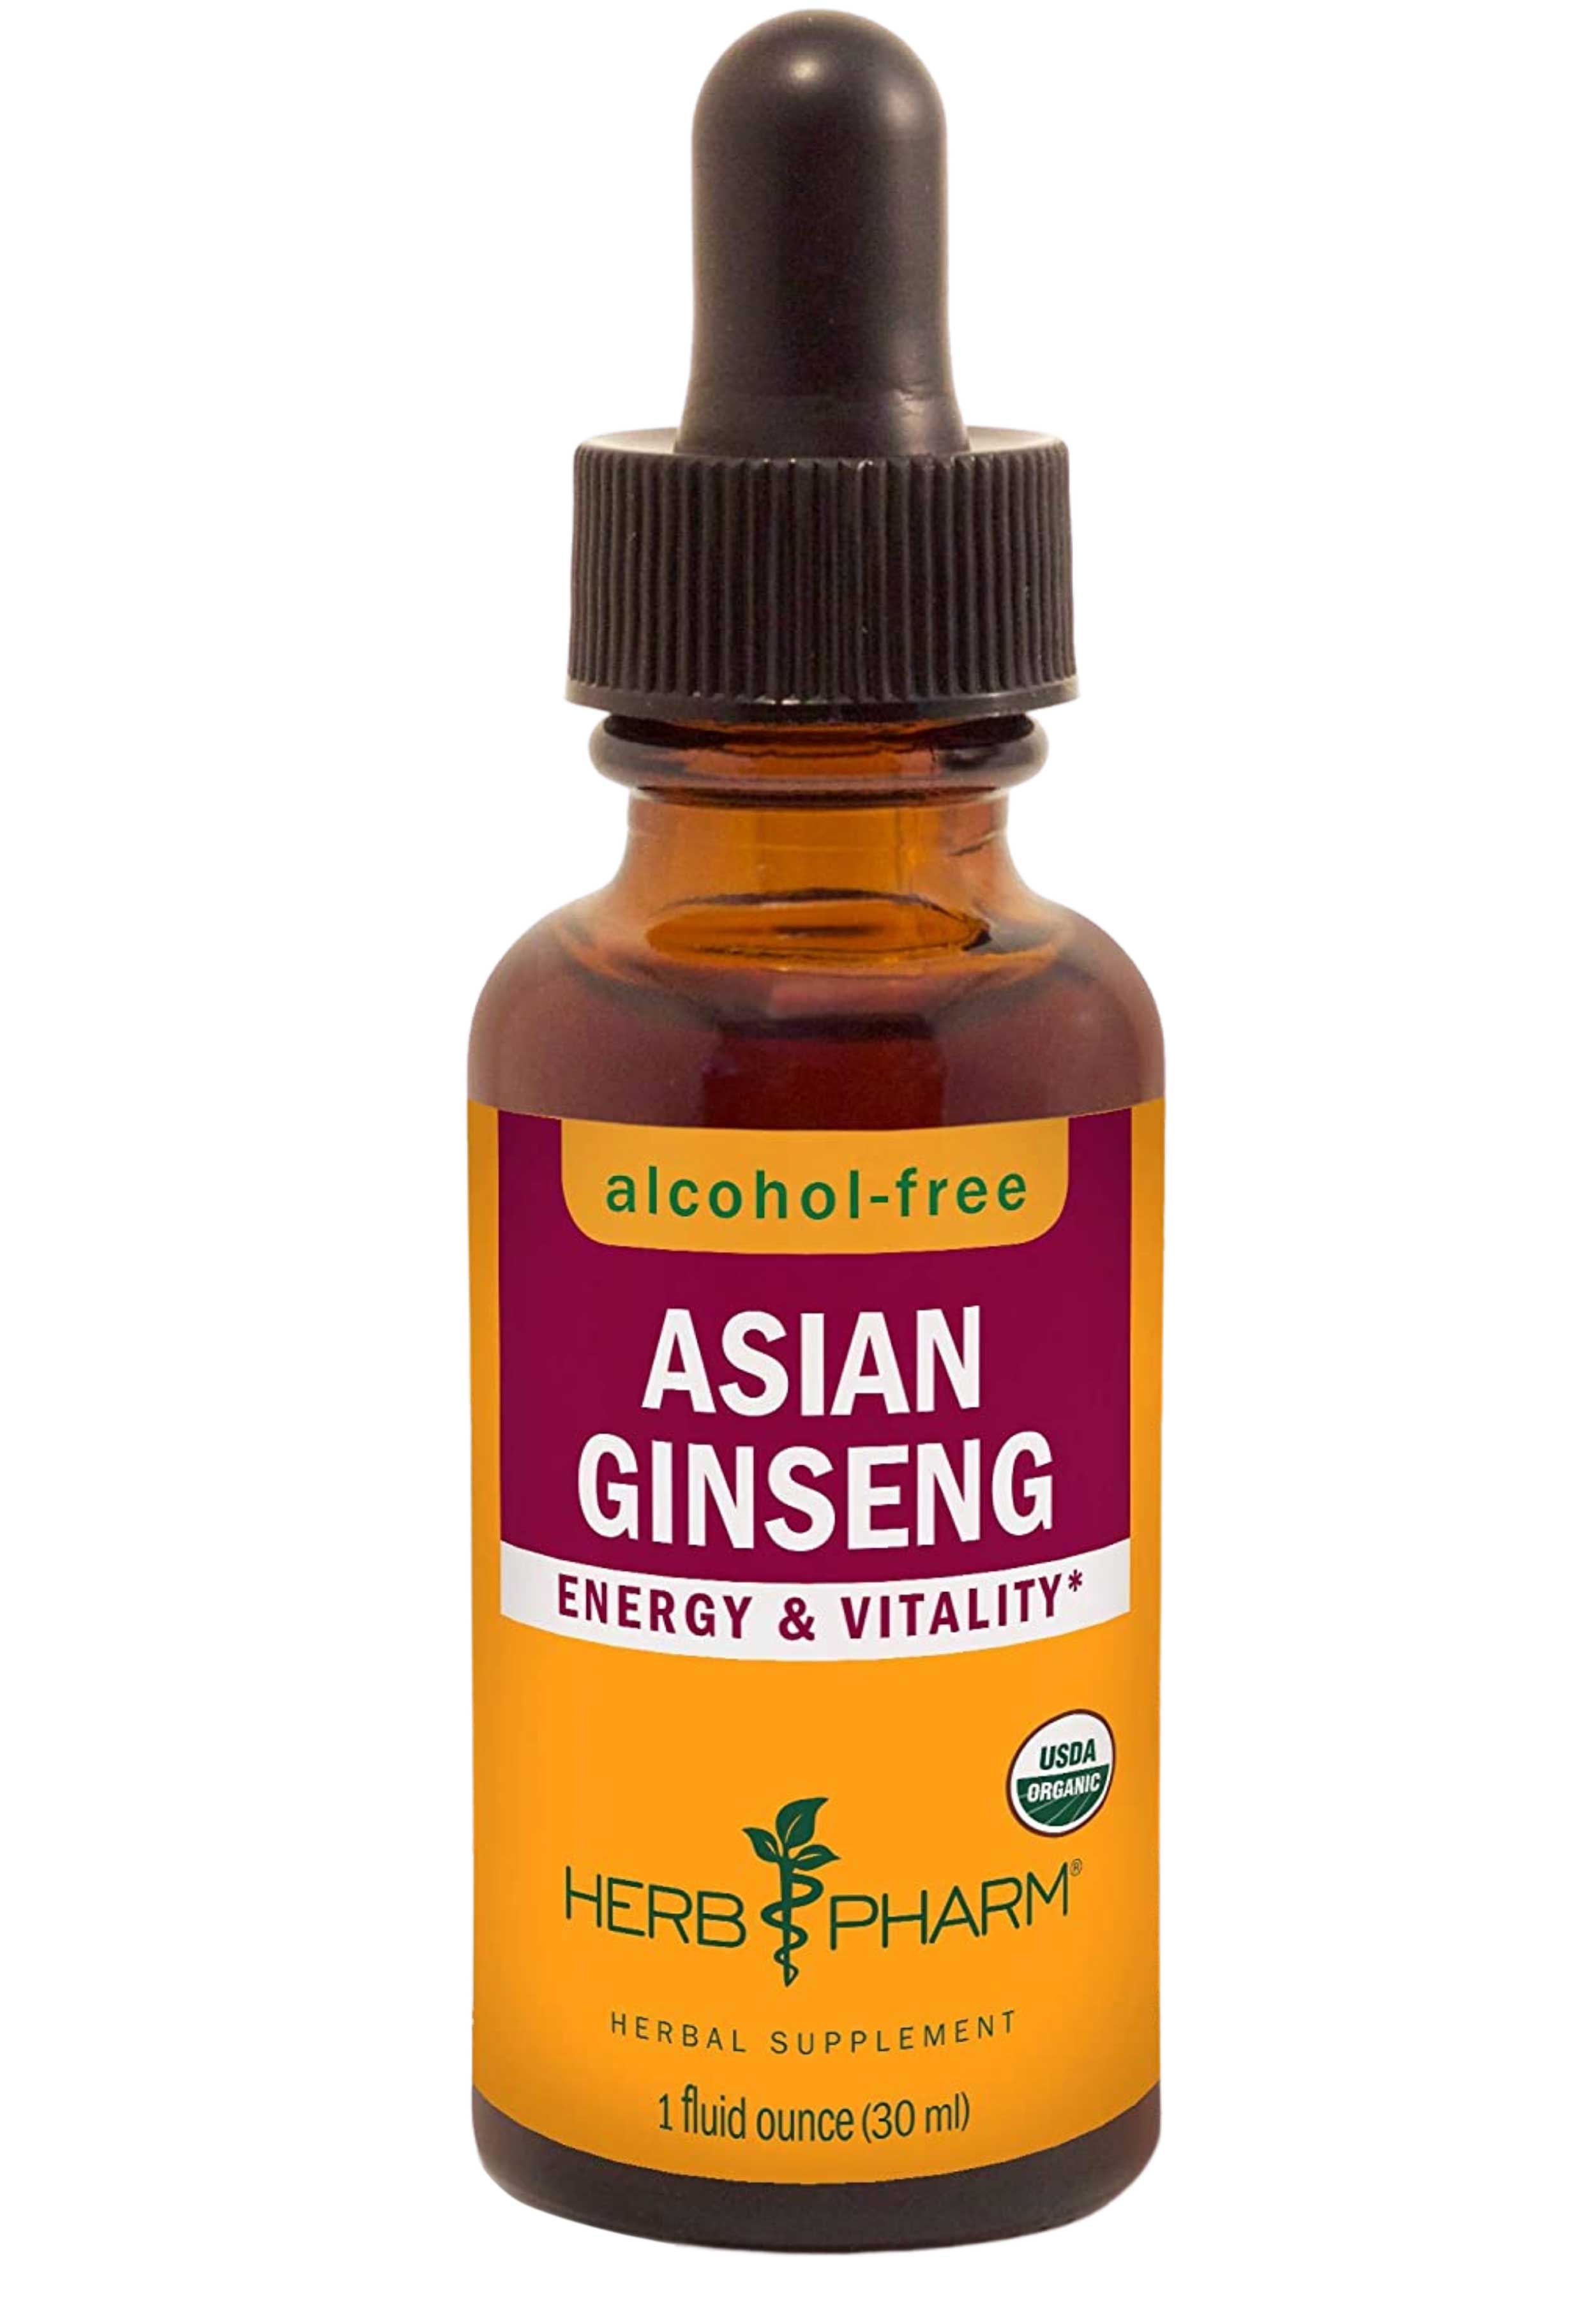 Herb Pharm Asian Ginseng Alcohol-Free